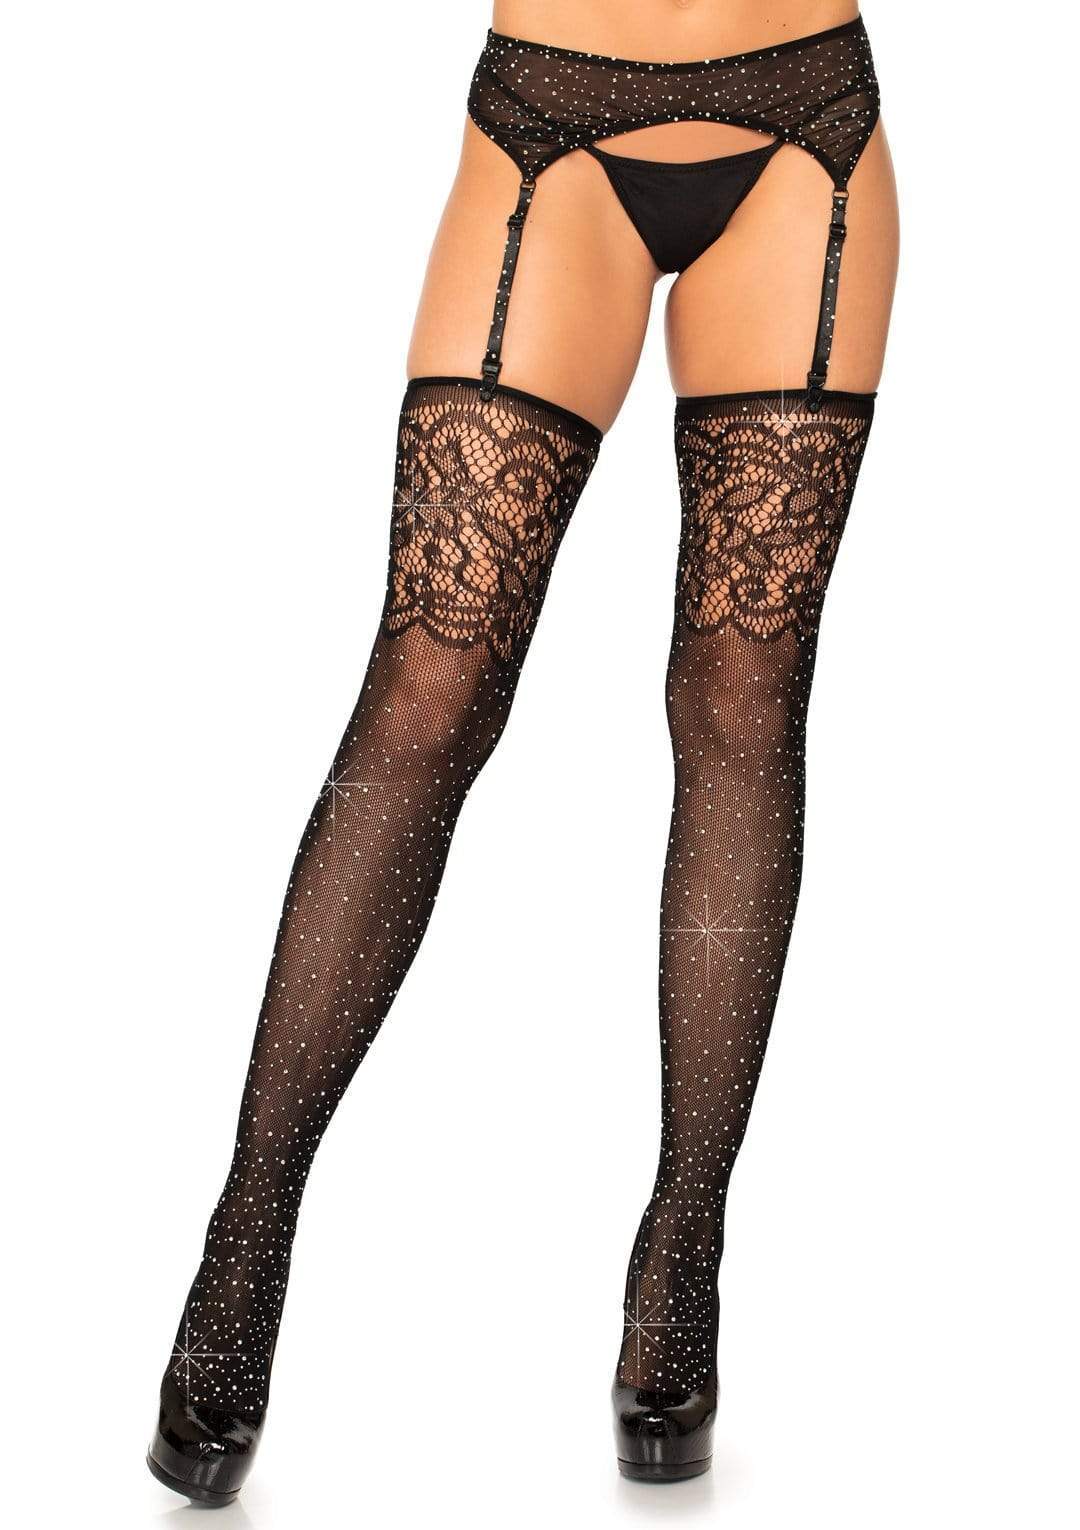 rhinestone lace stockings